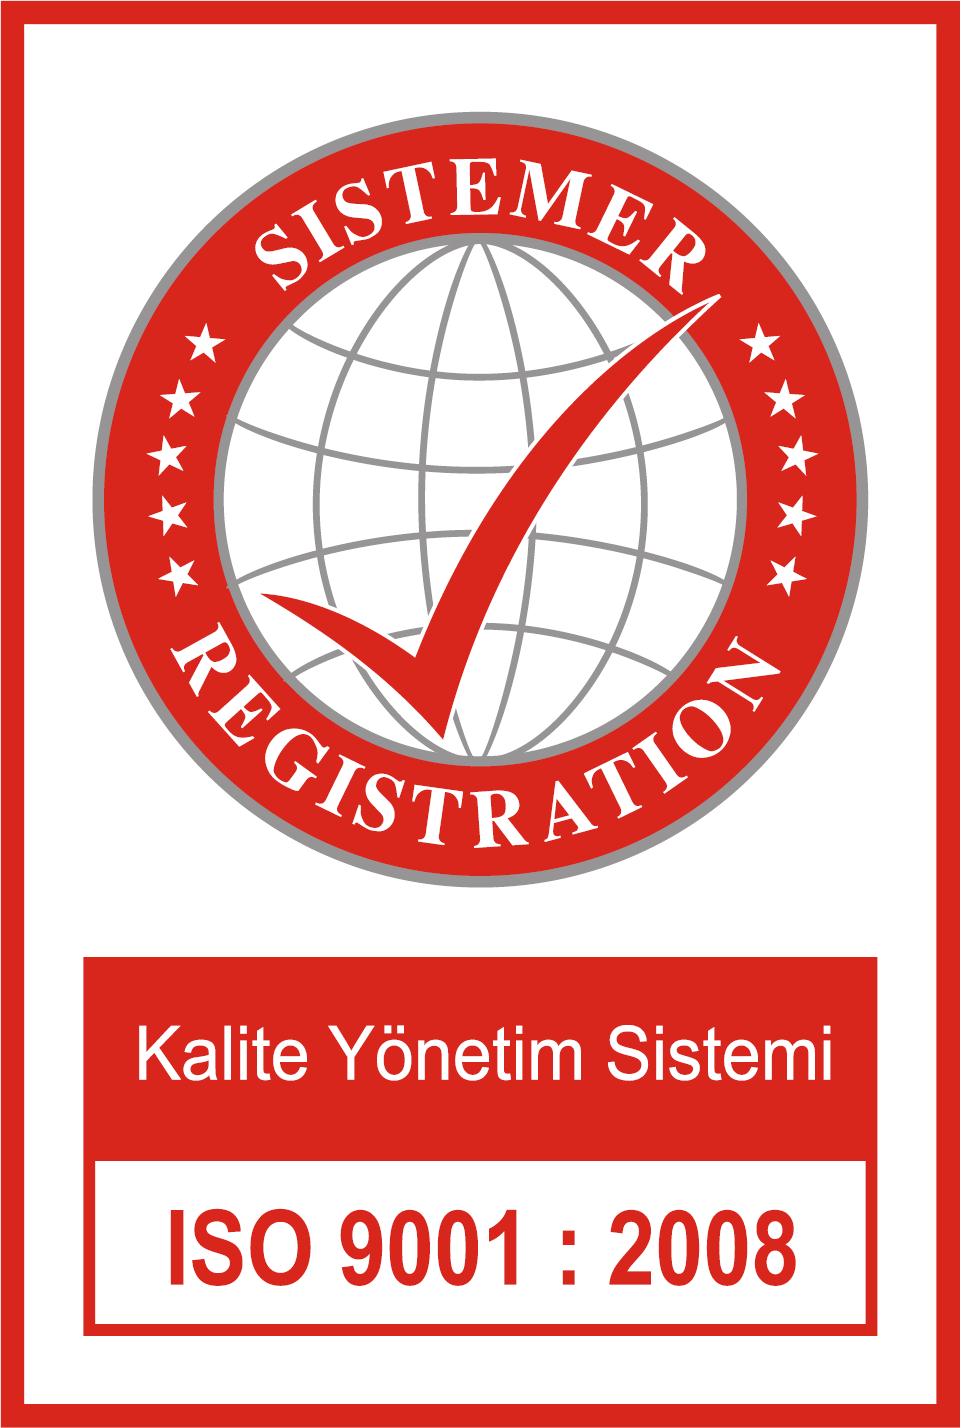 sistemer logo-90012008